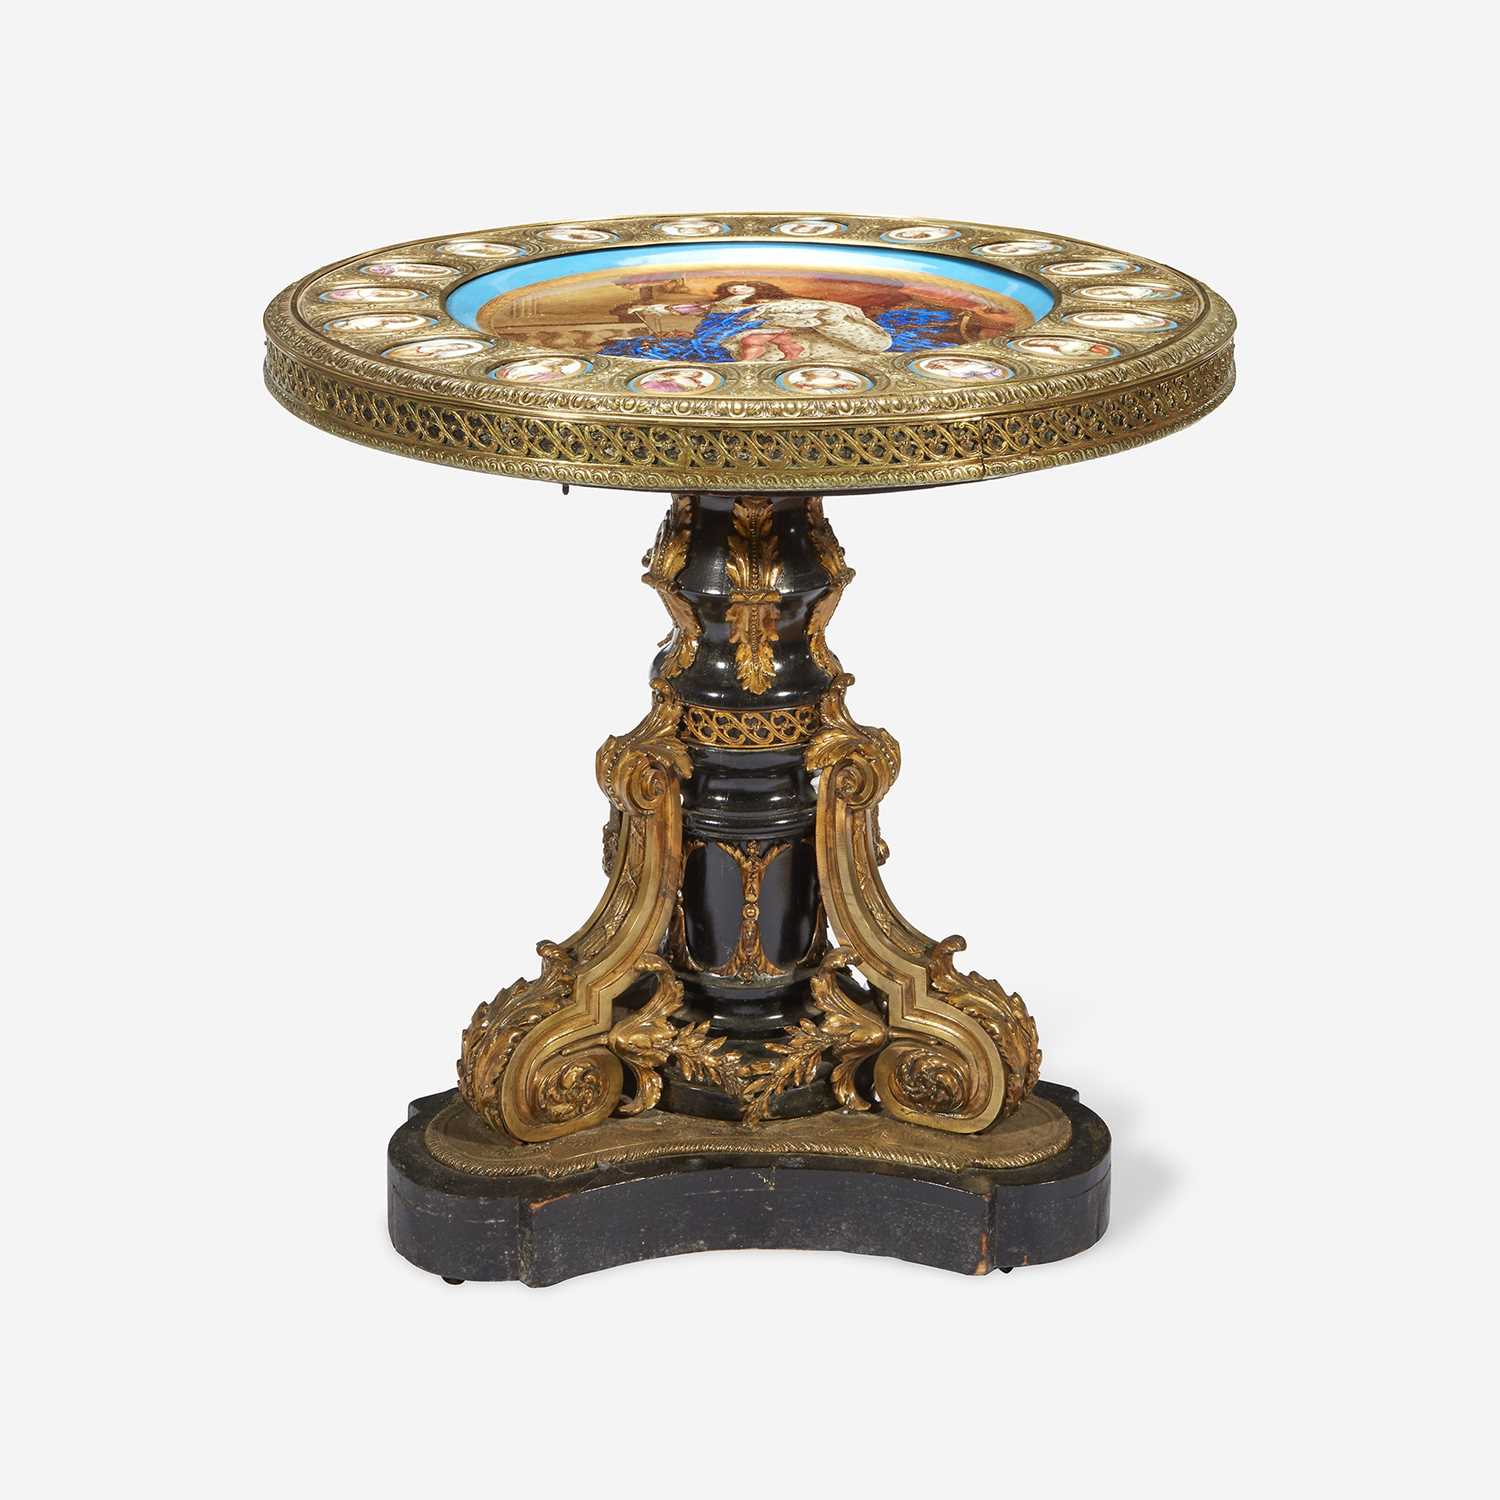 Lot 53 - A Sèvres Style Porcelain Mounted Ebonized and Gilt-Bronze Gueridon Table